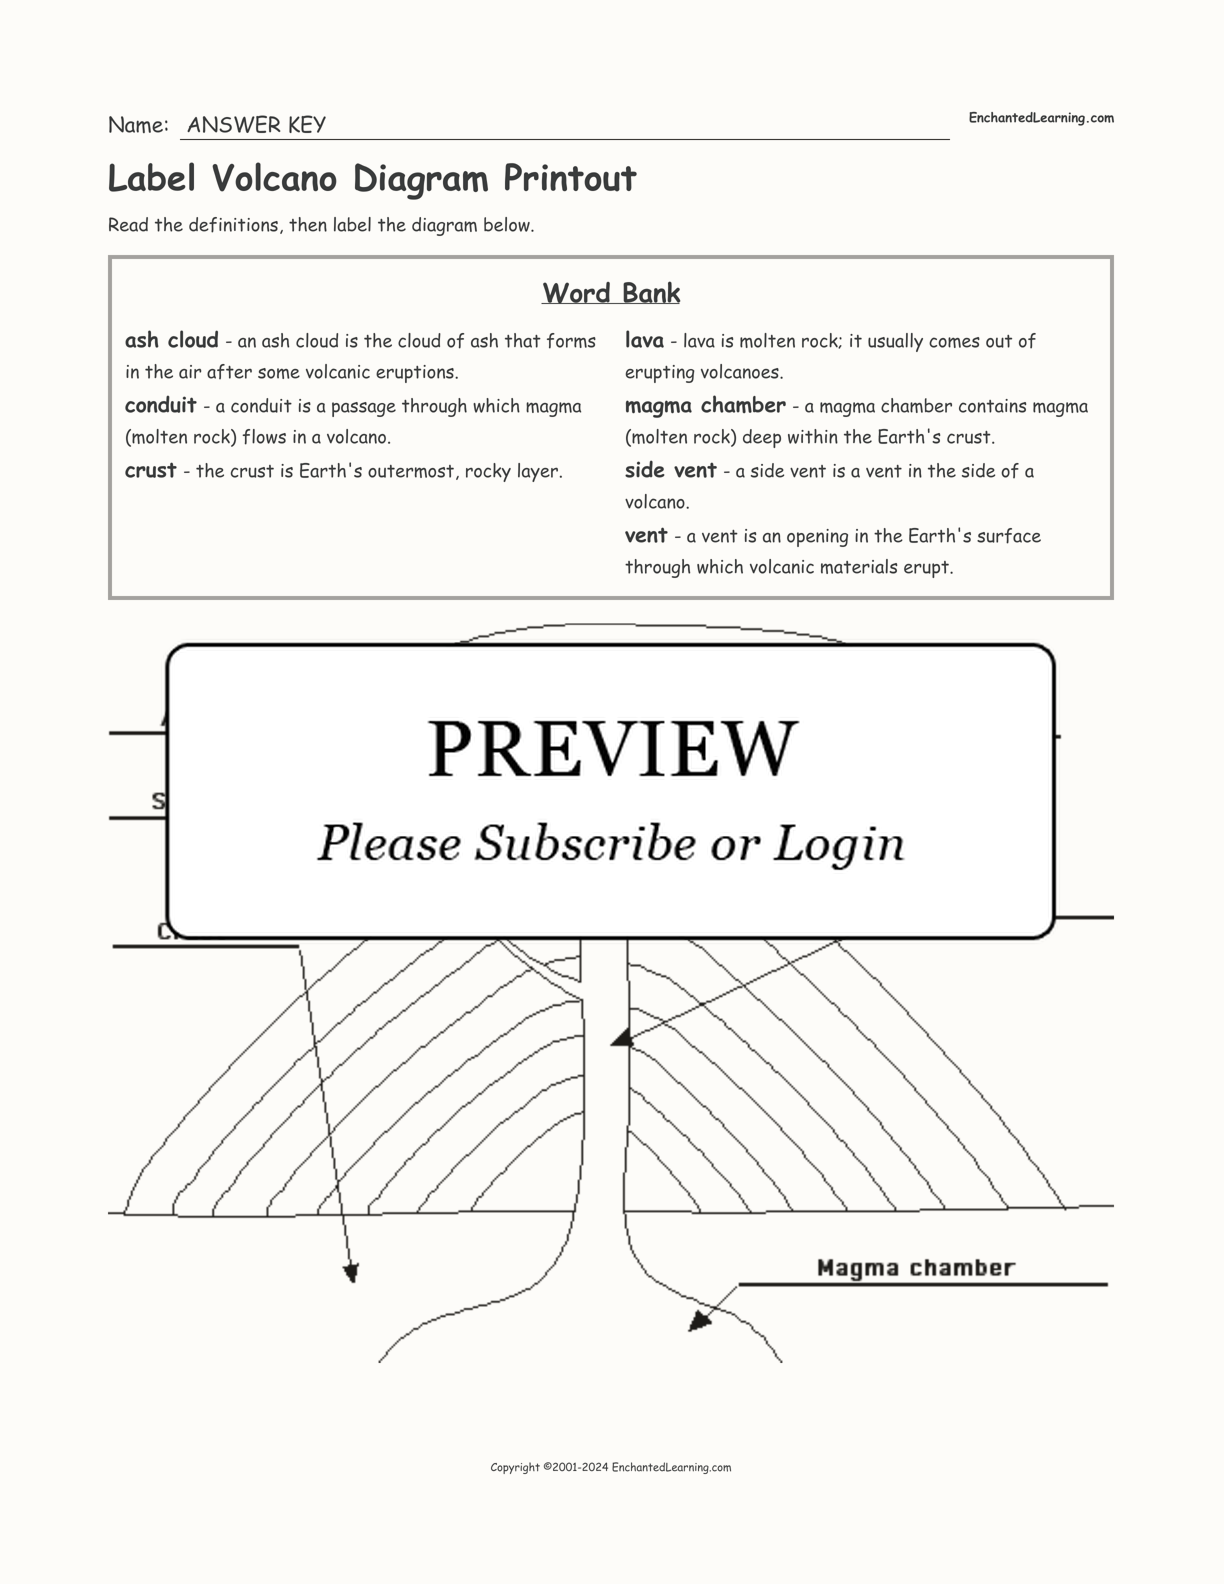 Label Volcano Diagram Printout interactive worksheet page 2